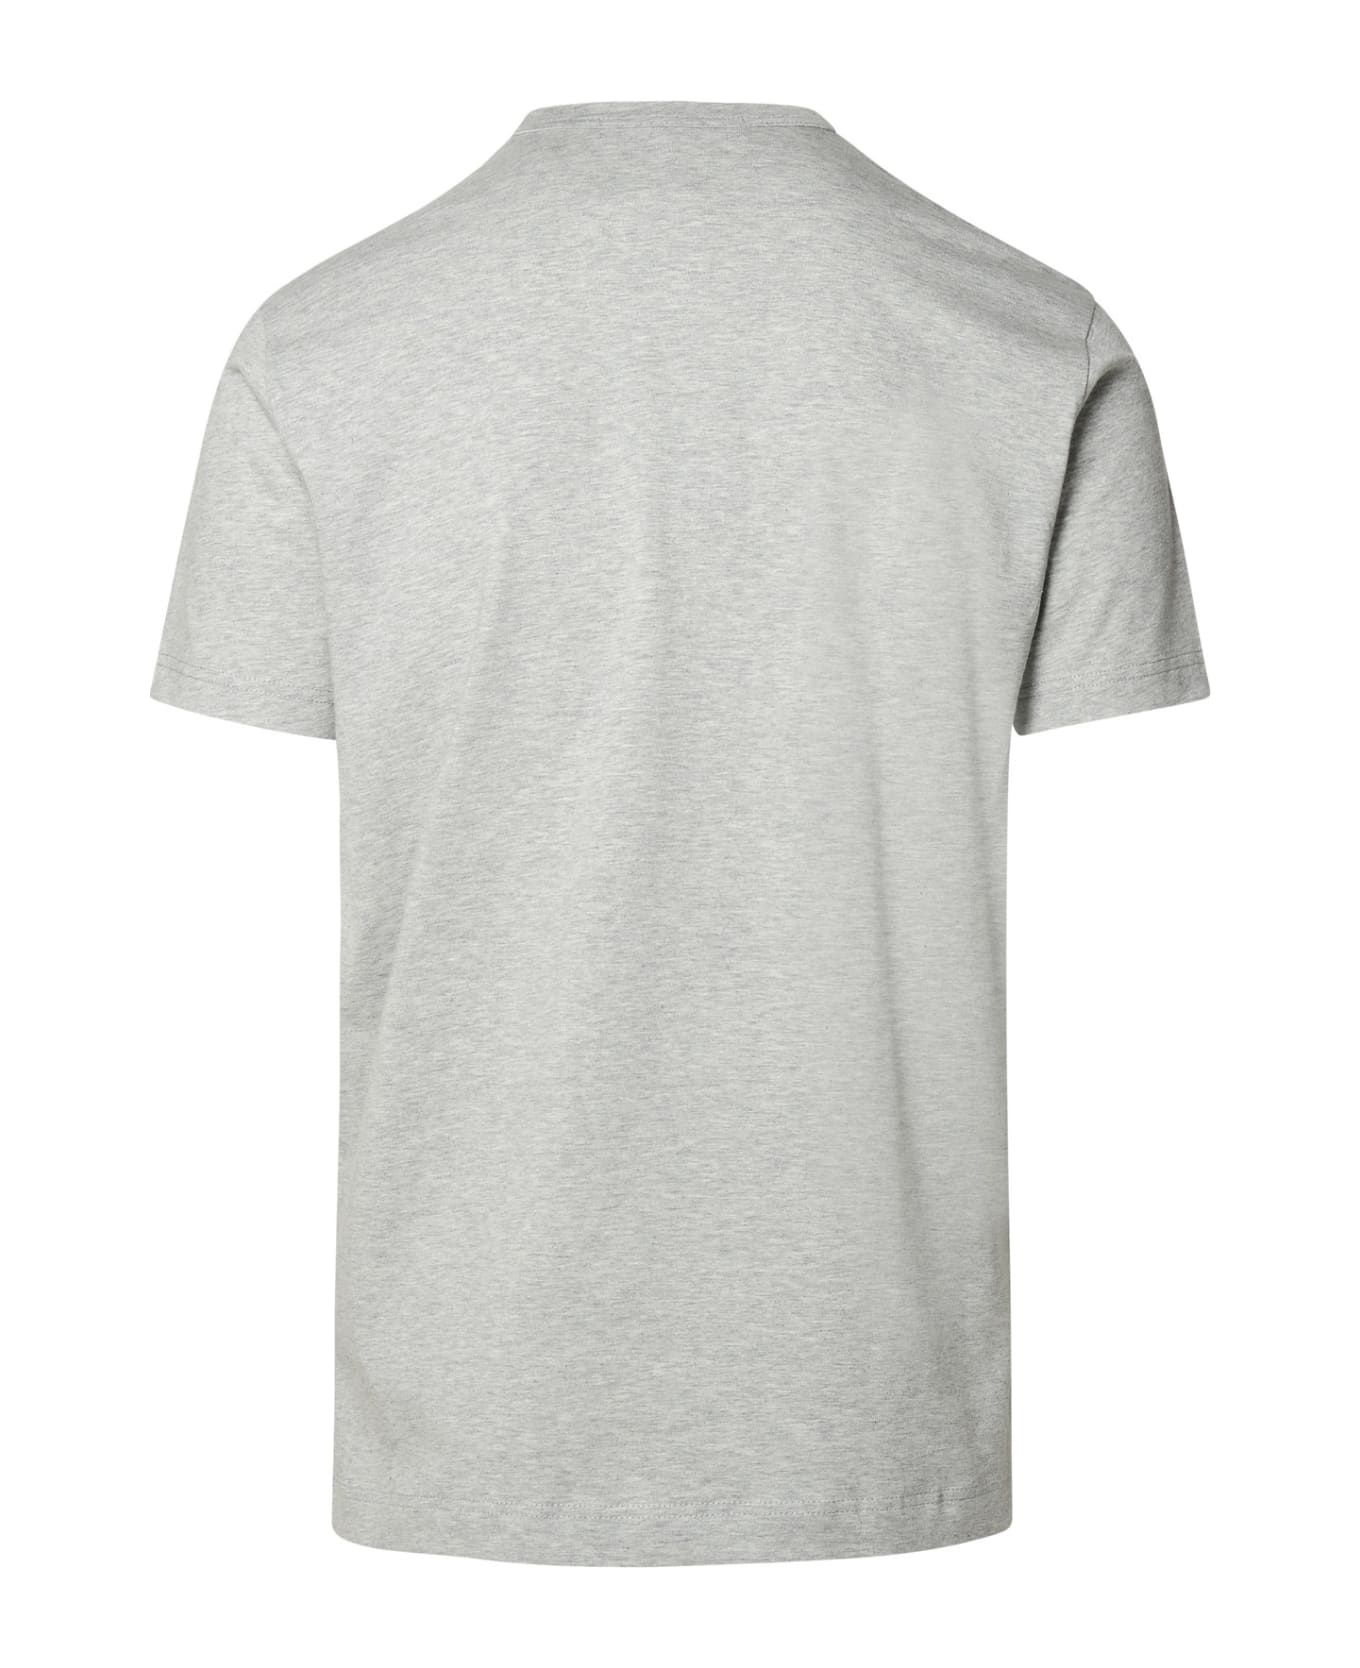 Comme des Garçons Shirt 'marilyn Monroe' Grey Cotton T-shirt - Grey